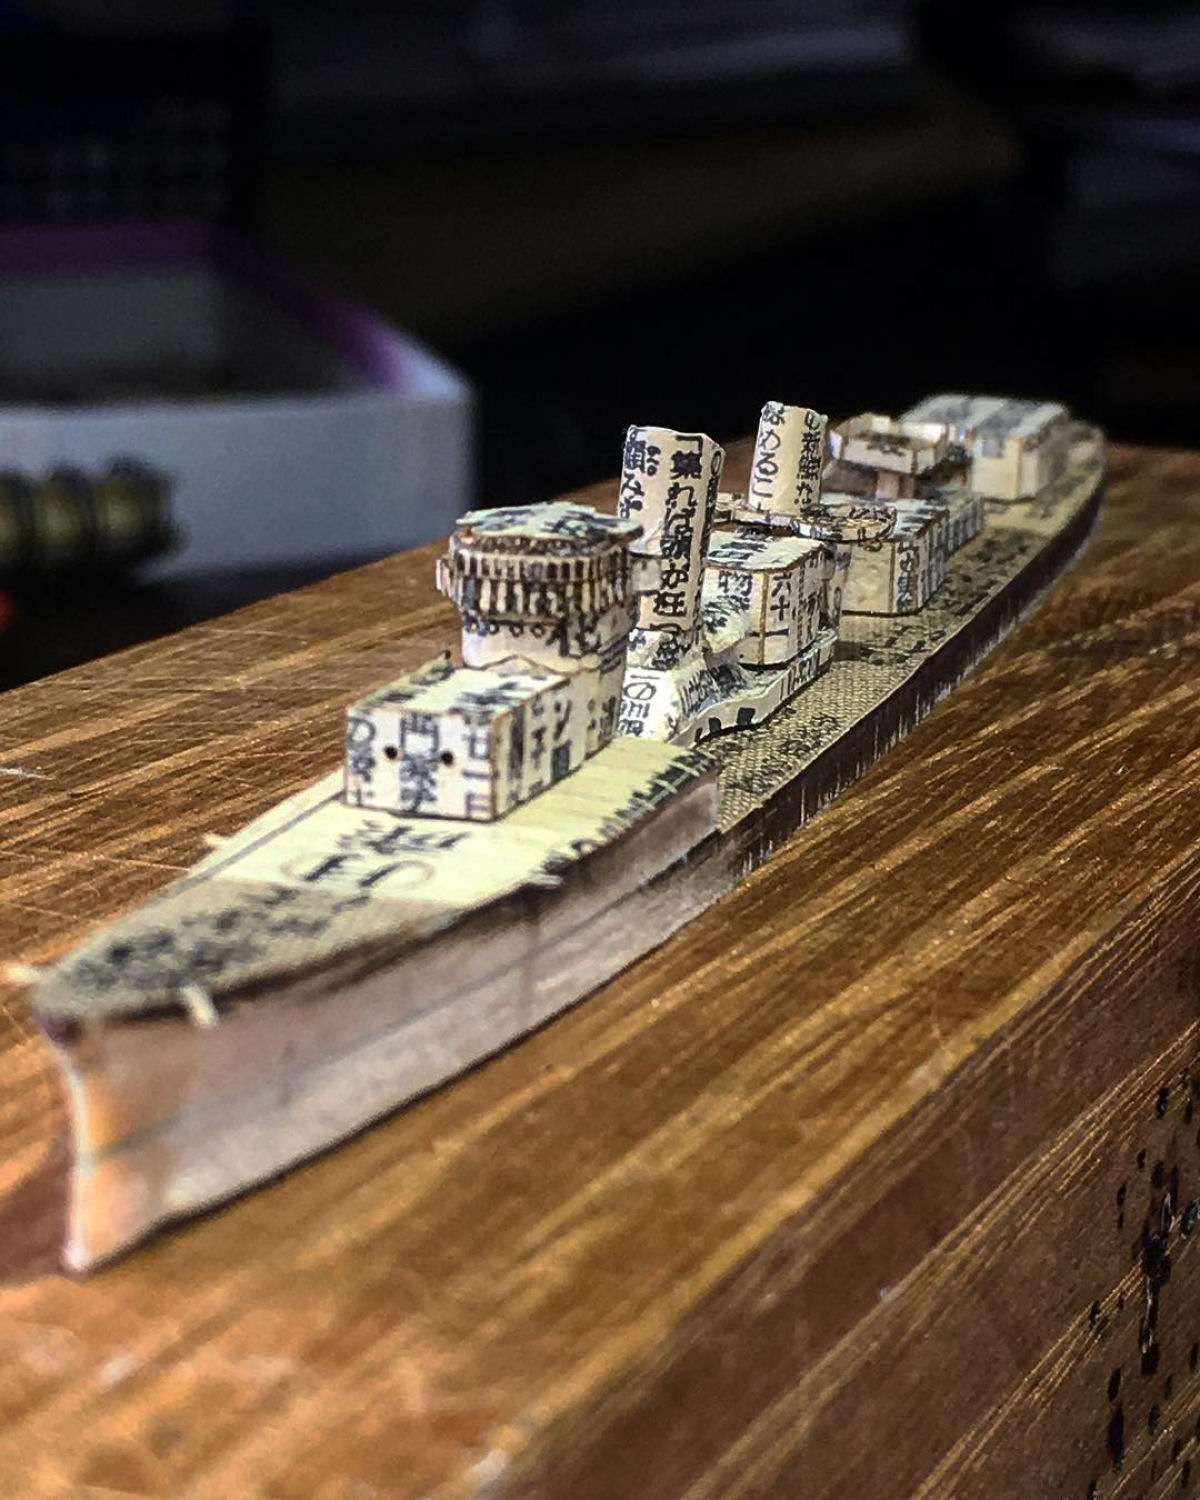 As maquetes intrincadas de navios de guerra feitas com jornais antigos 11